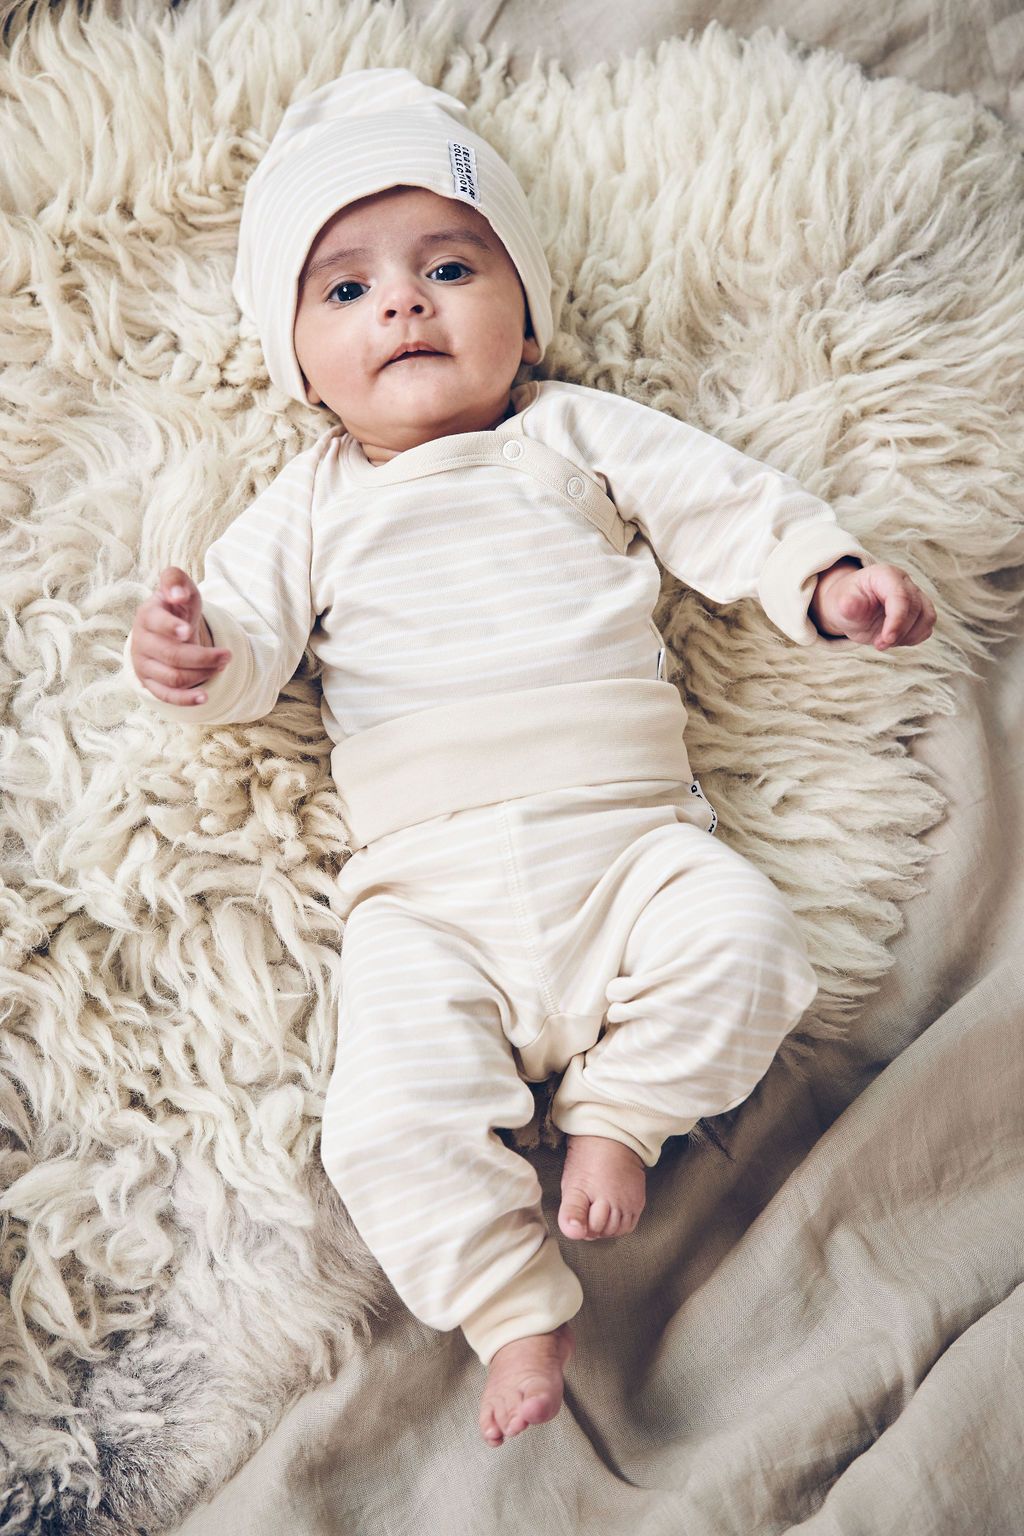 Geggamoja® Organic Cotton Baby Pants - BEIGE/WHITE STRIPE